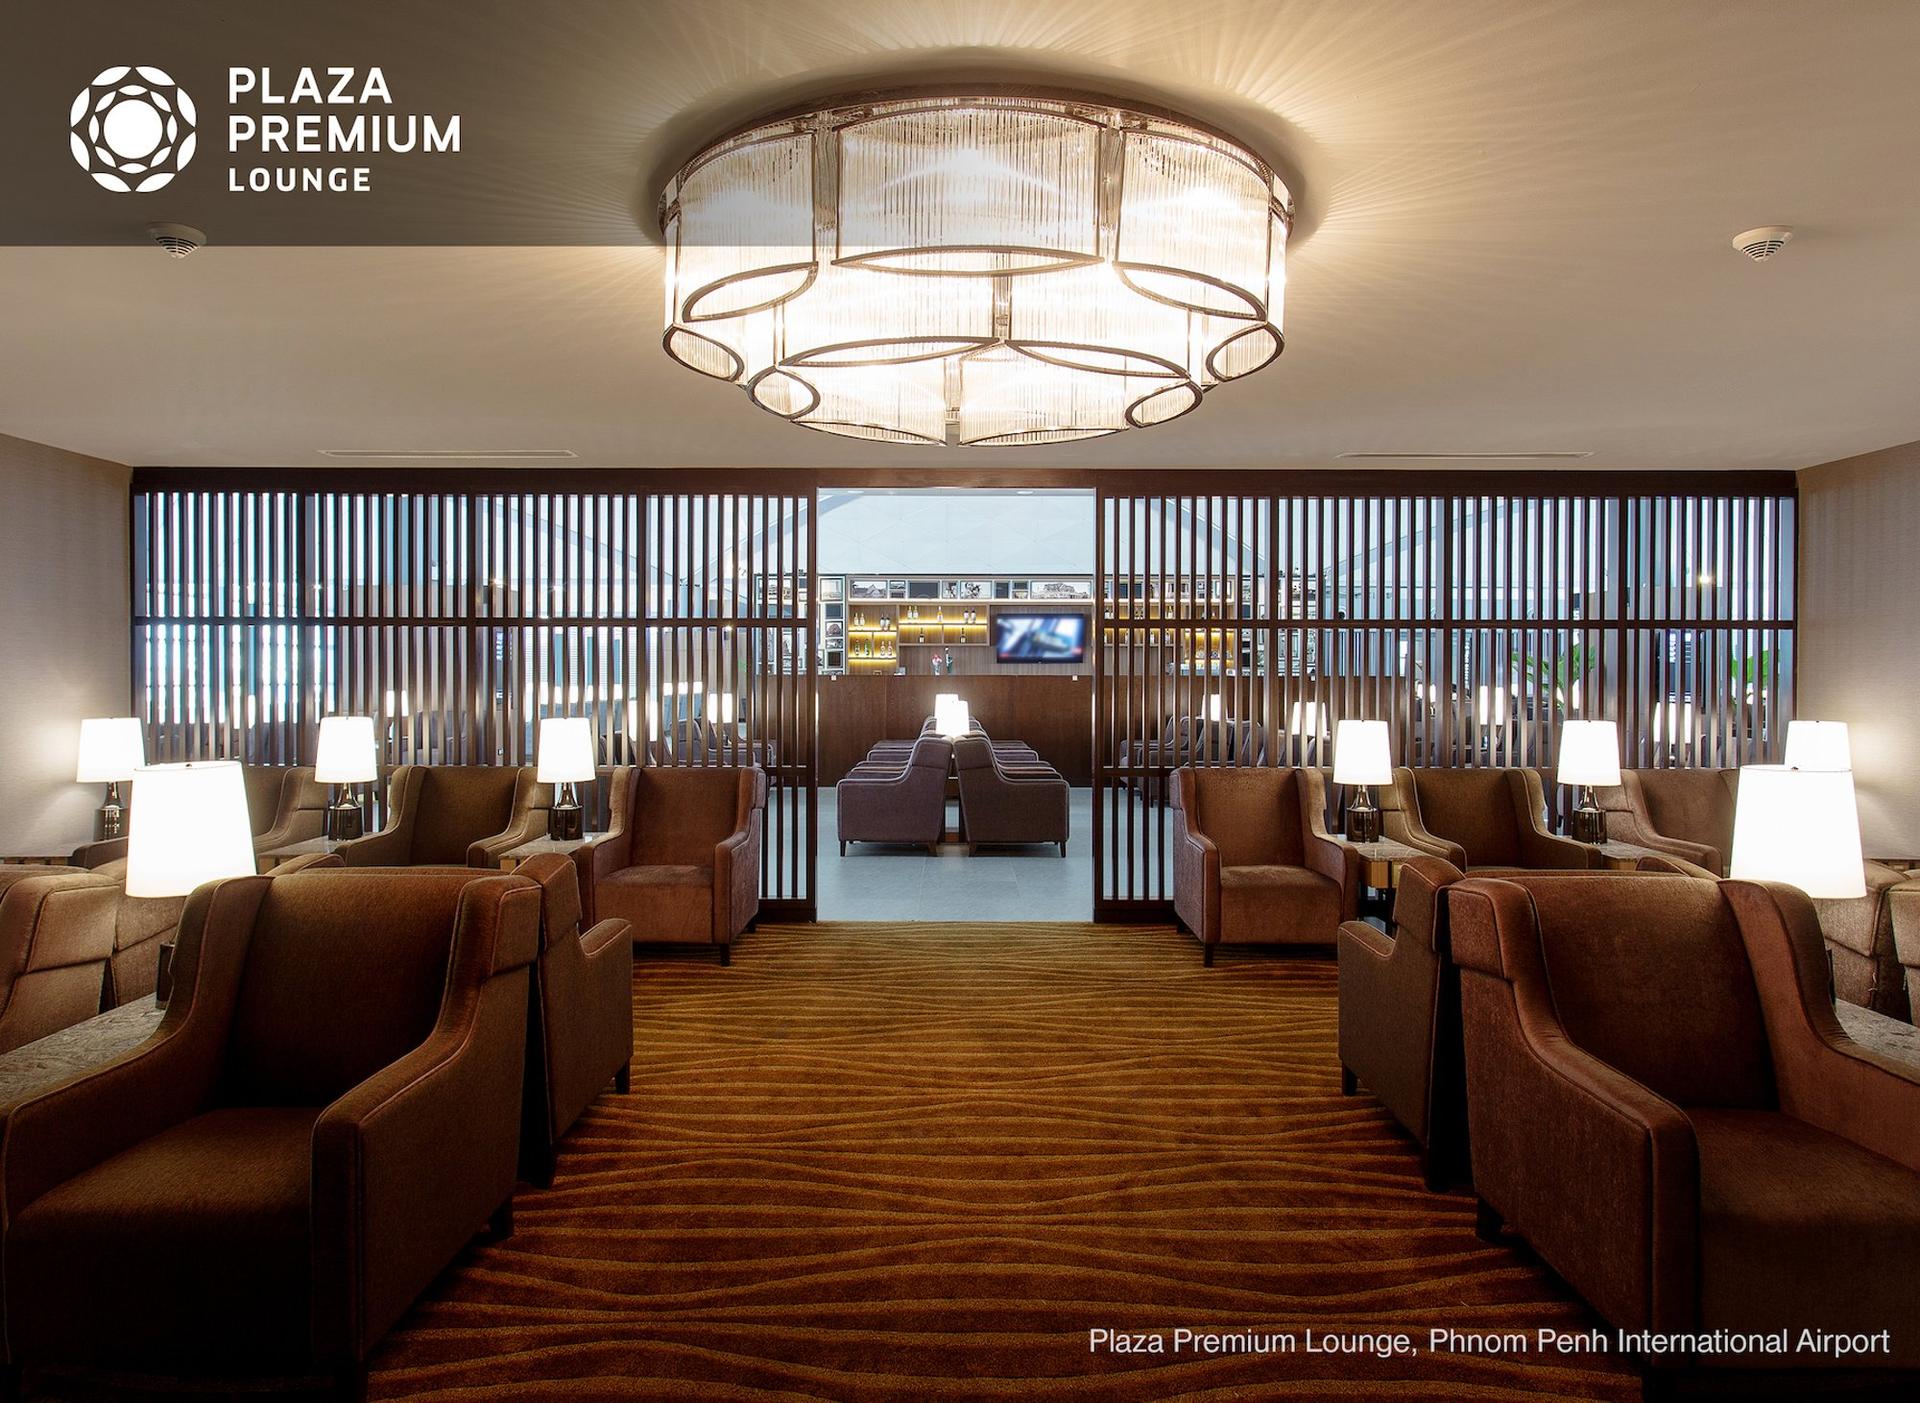 Plaza Premium Lounge image 30 of 34